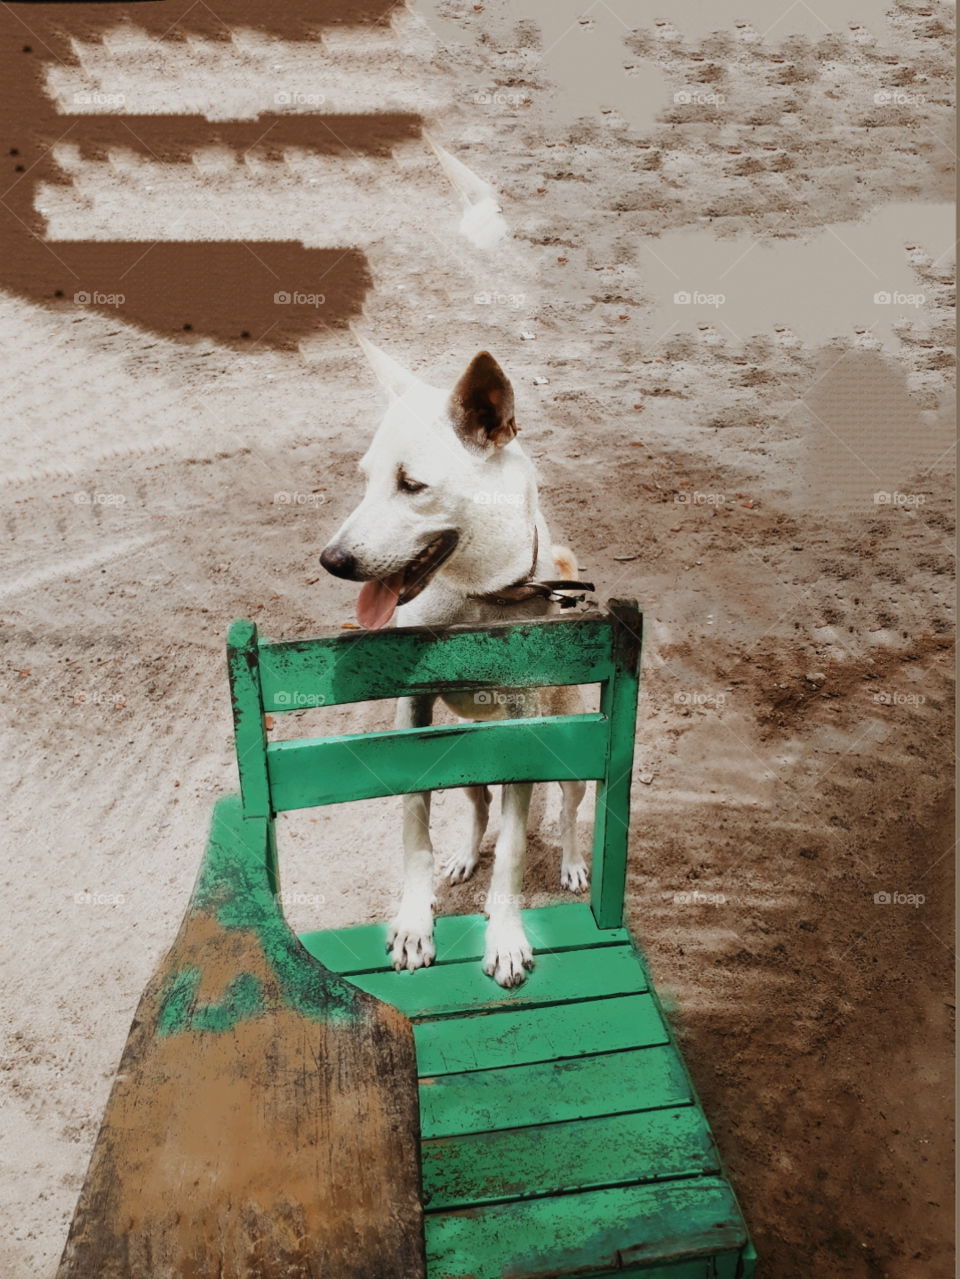 #dog #chair #green #Instagram #laboratory #cachorro #cadeira #verde #natural